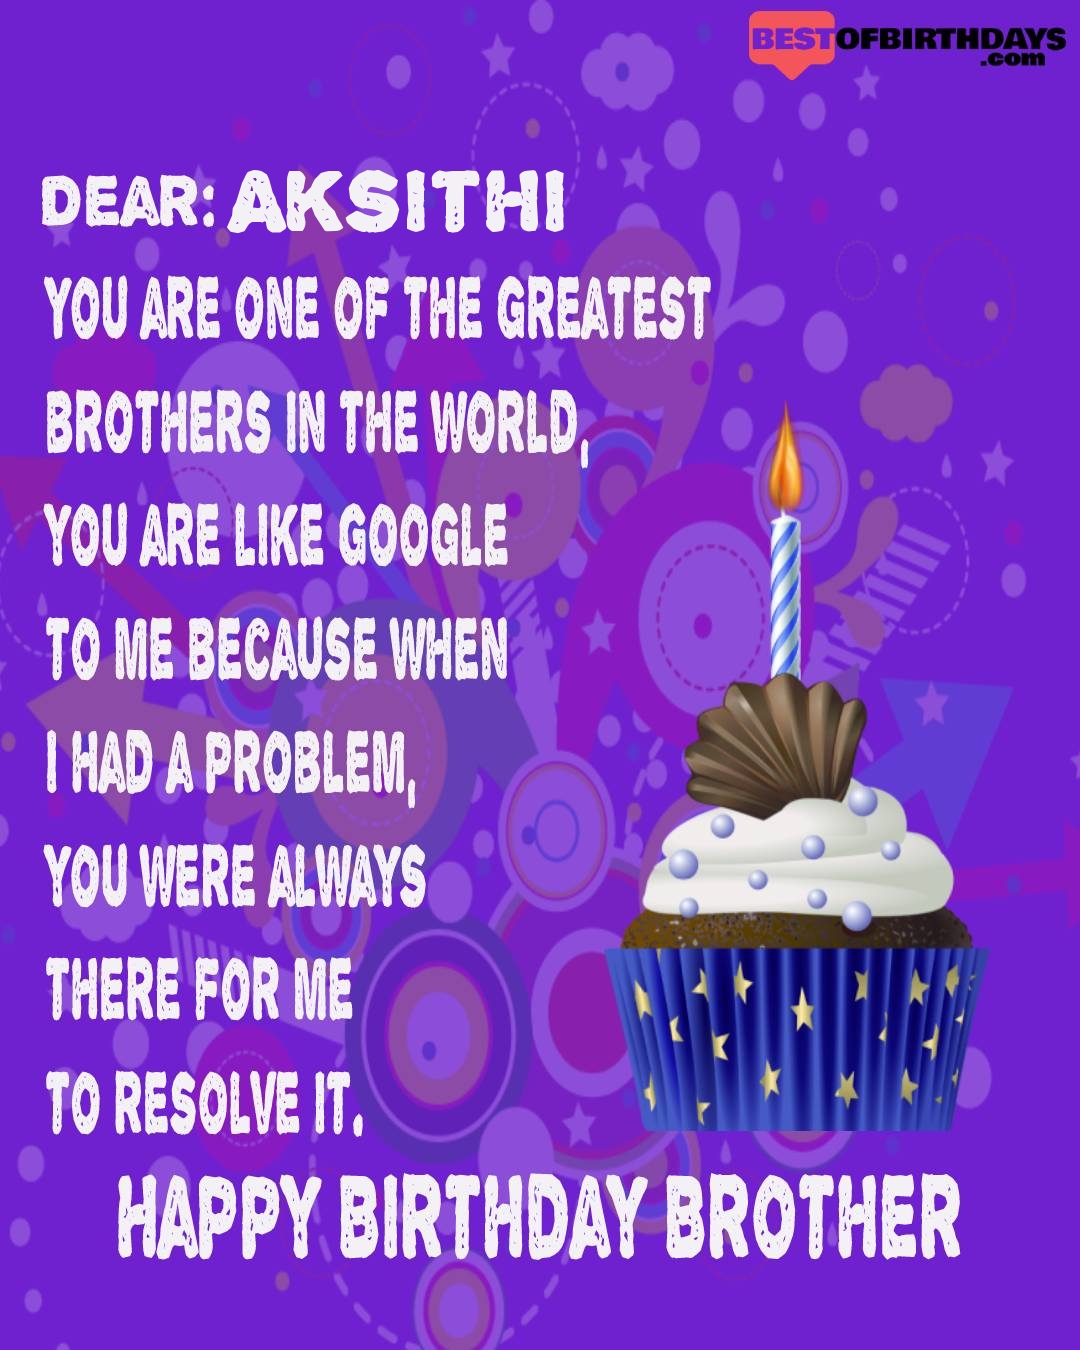 Happy birthday aksithi bhai brother bro